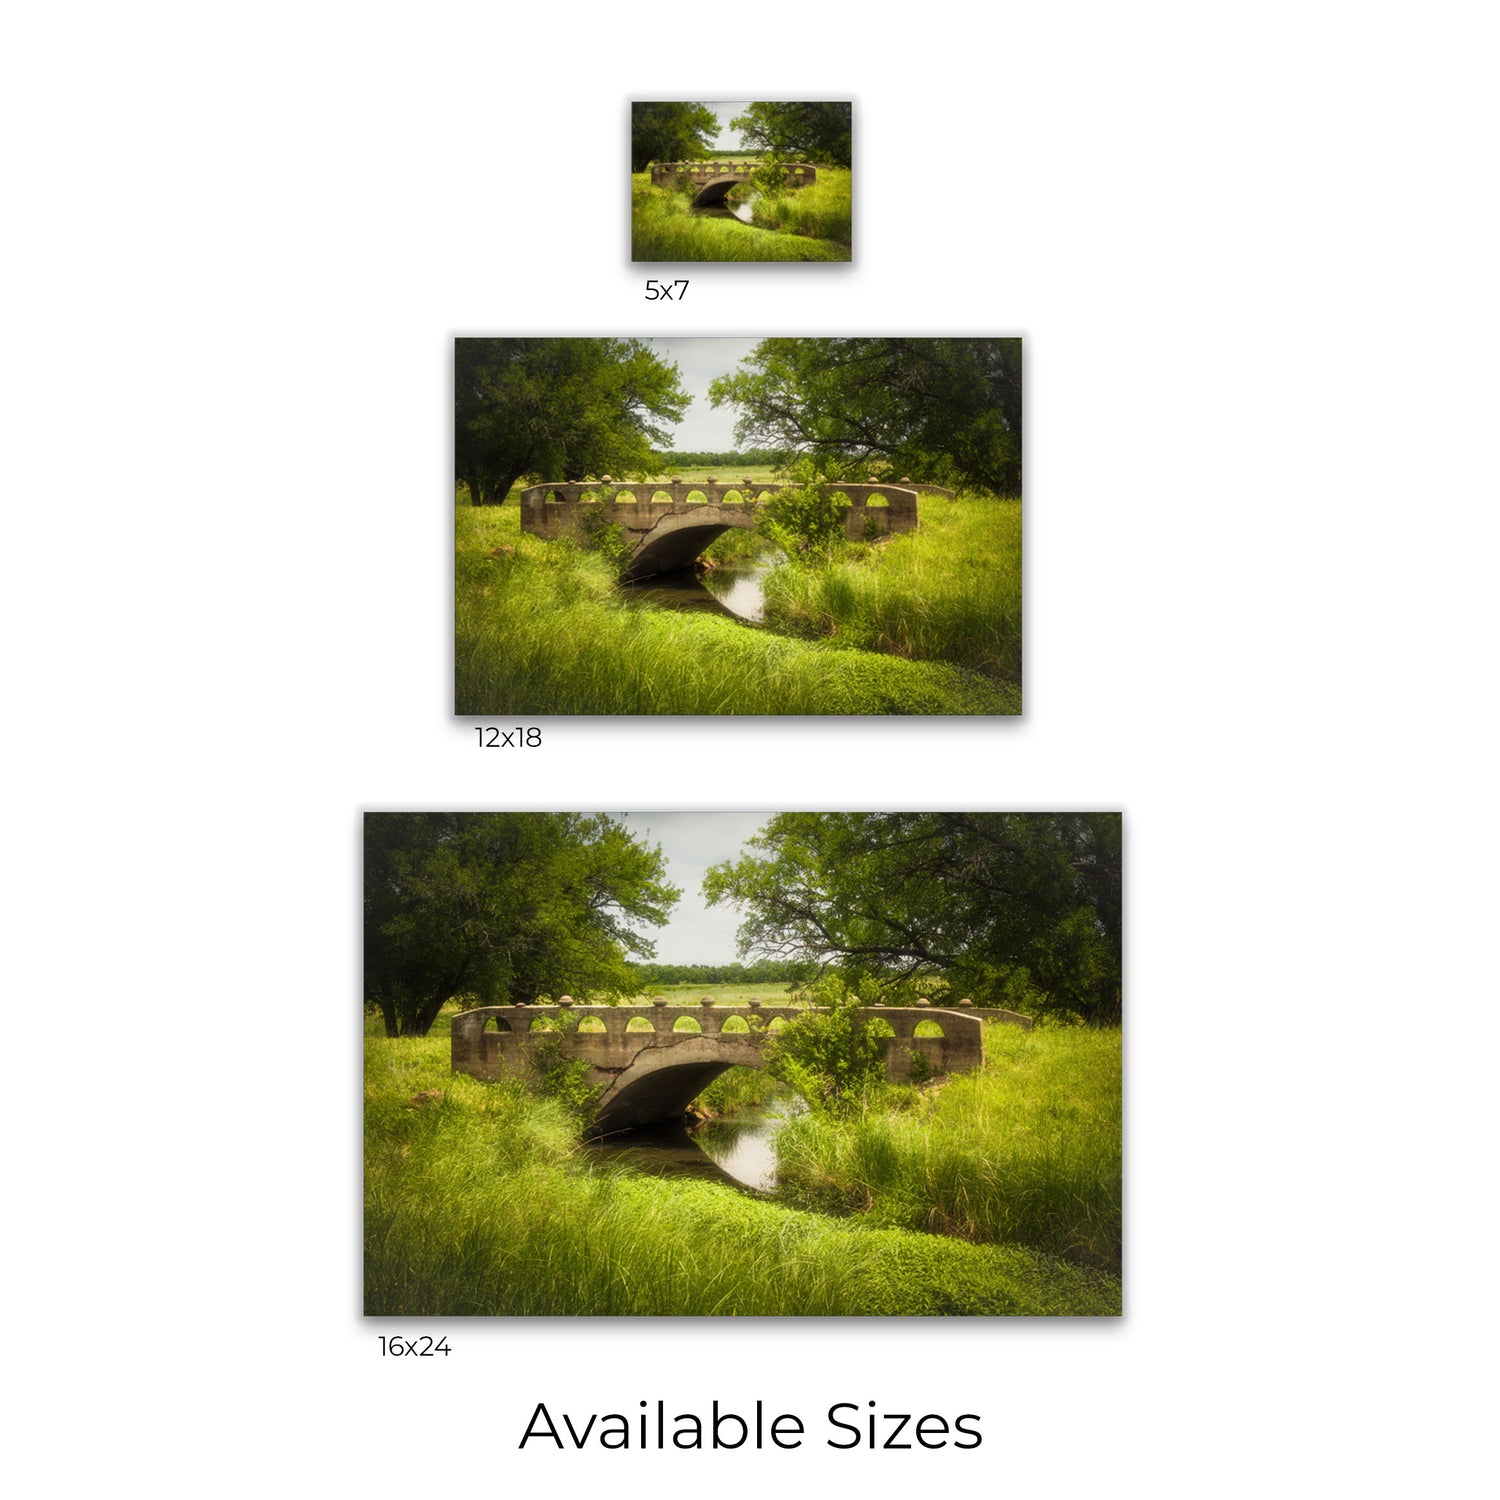 Visual representation of Gypsum Creek Bridge wall art print sizes available: 5x7, 12x18, and 16x24.